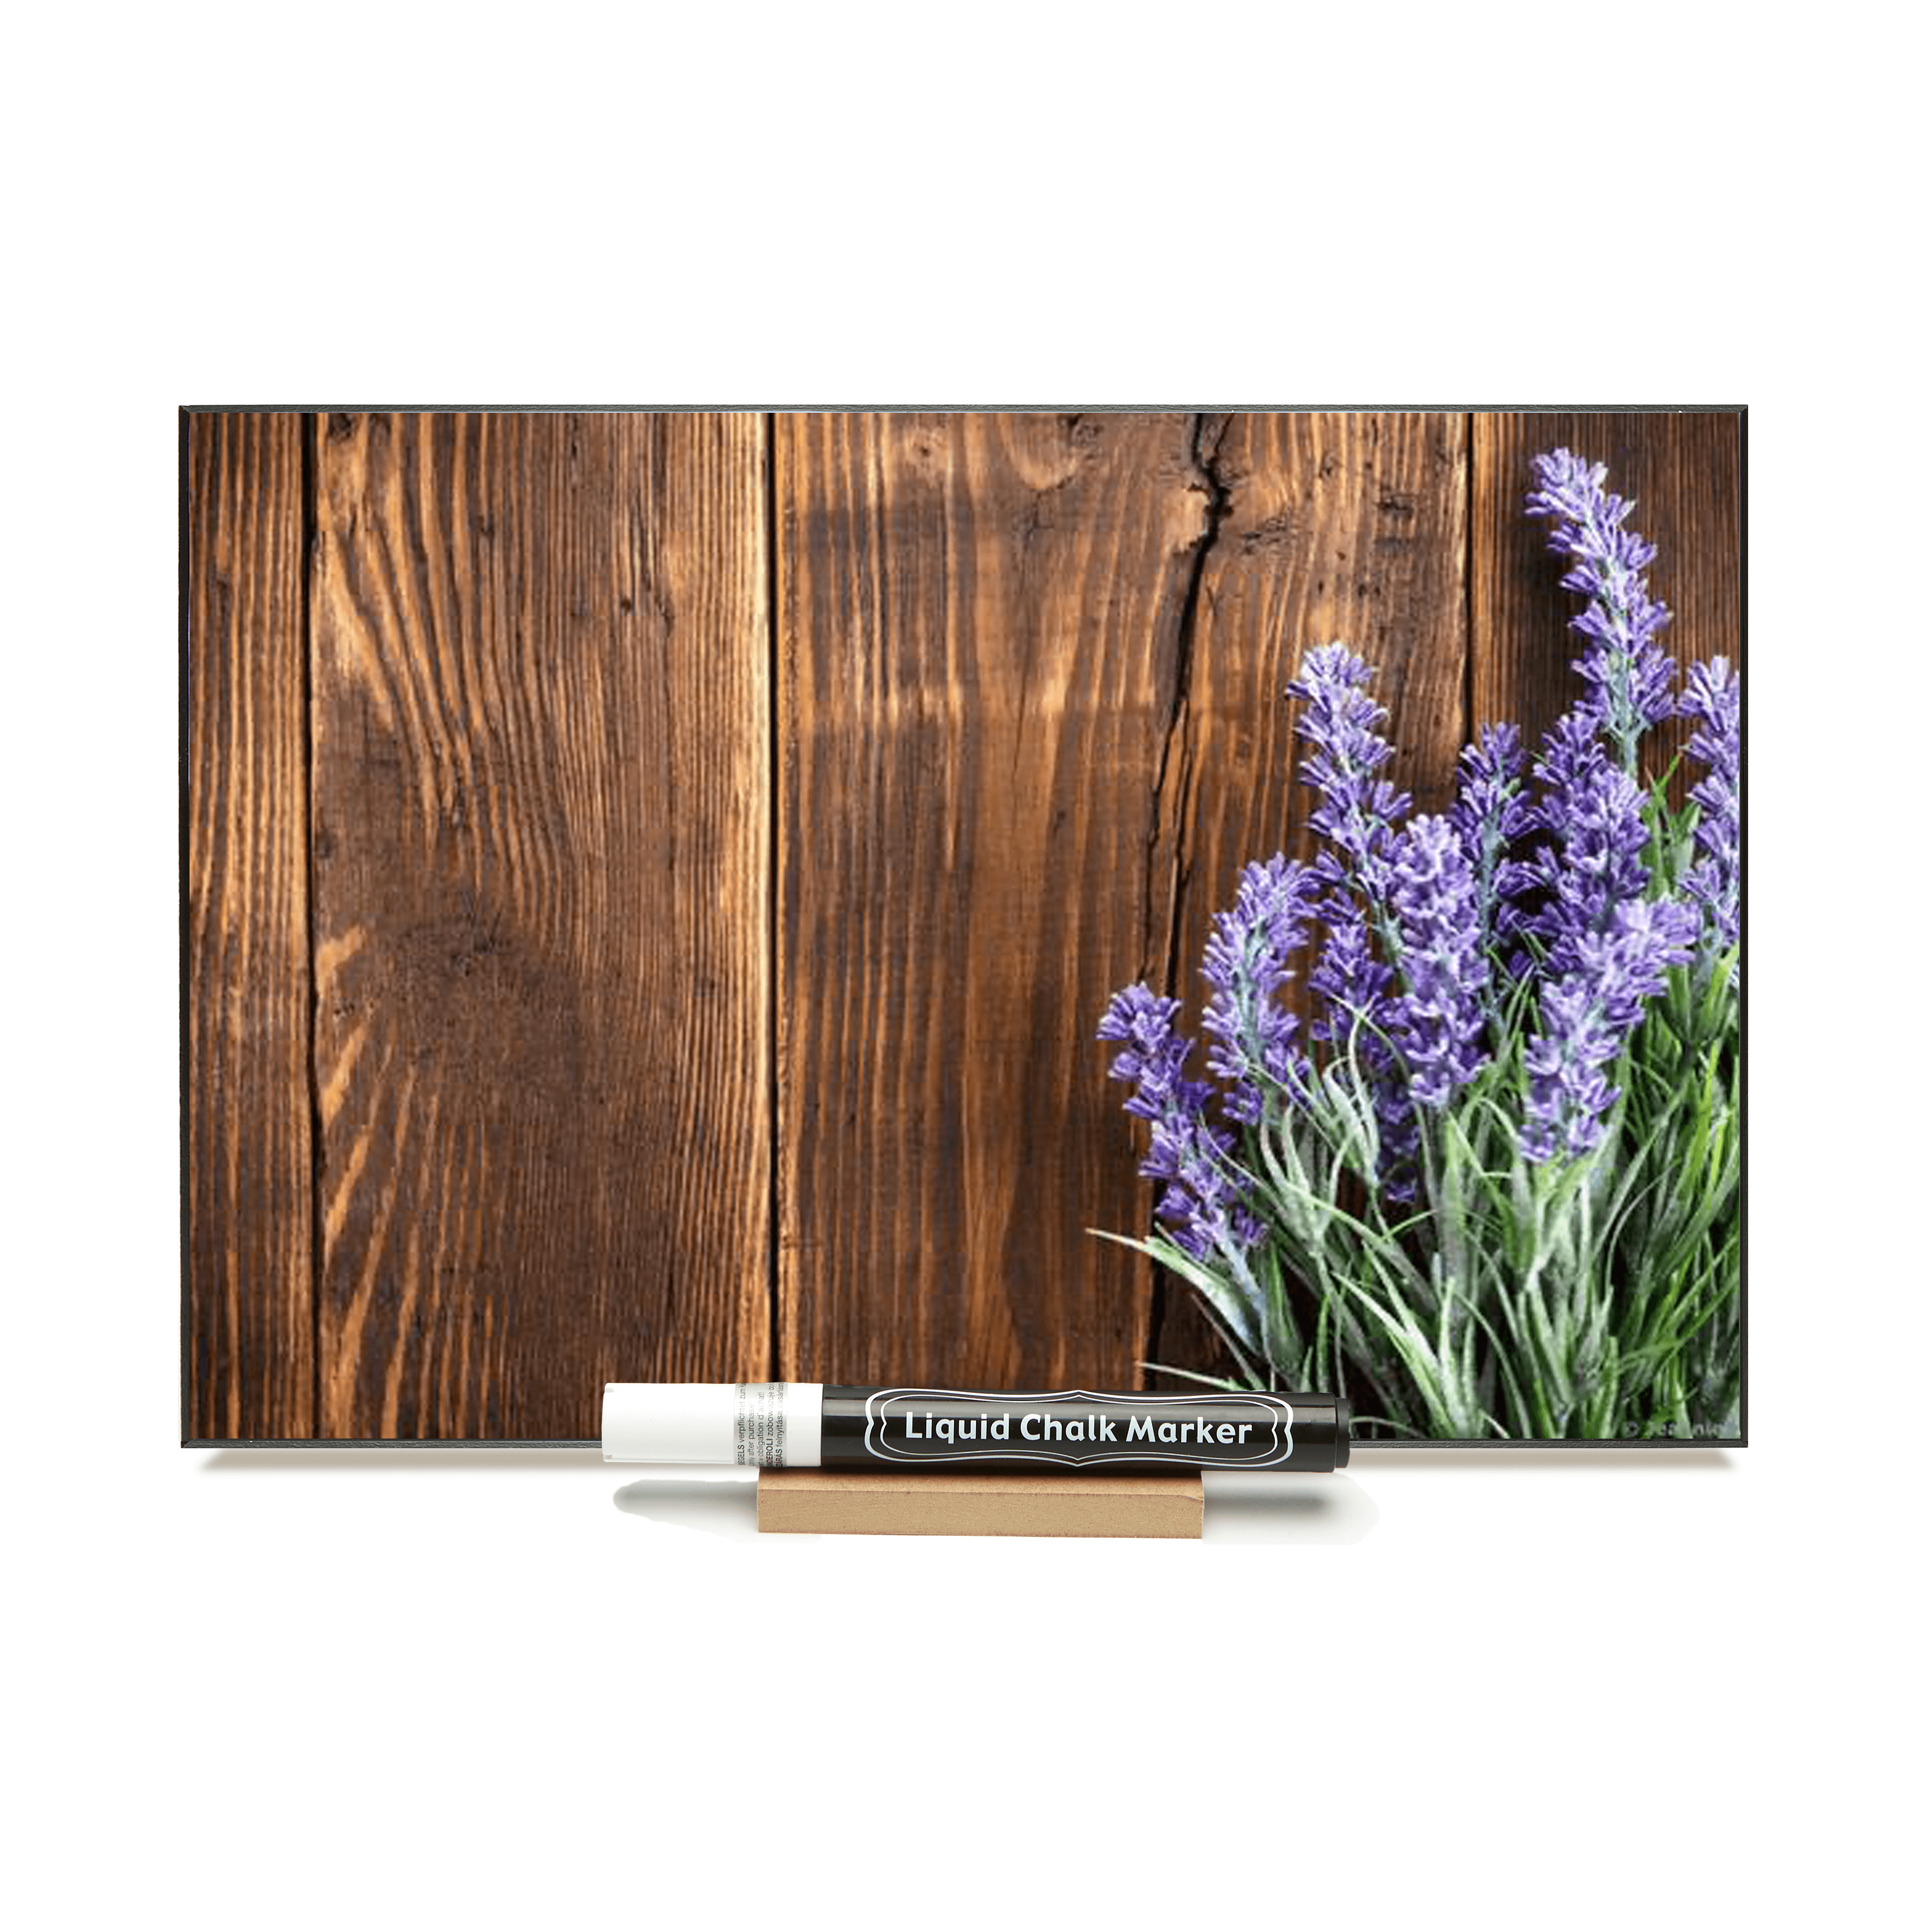 "Lavender" On Barnboard PHOTO CHALKBOARD  Includes Chalkboard, Chalk Marker and Stand